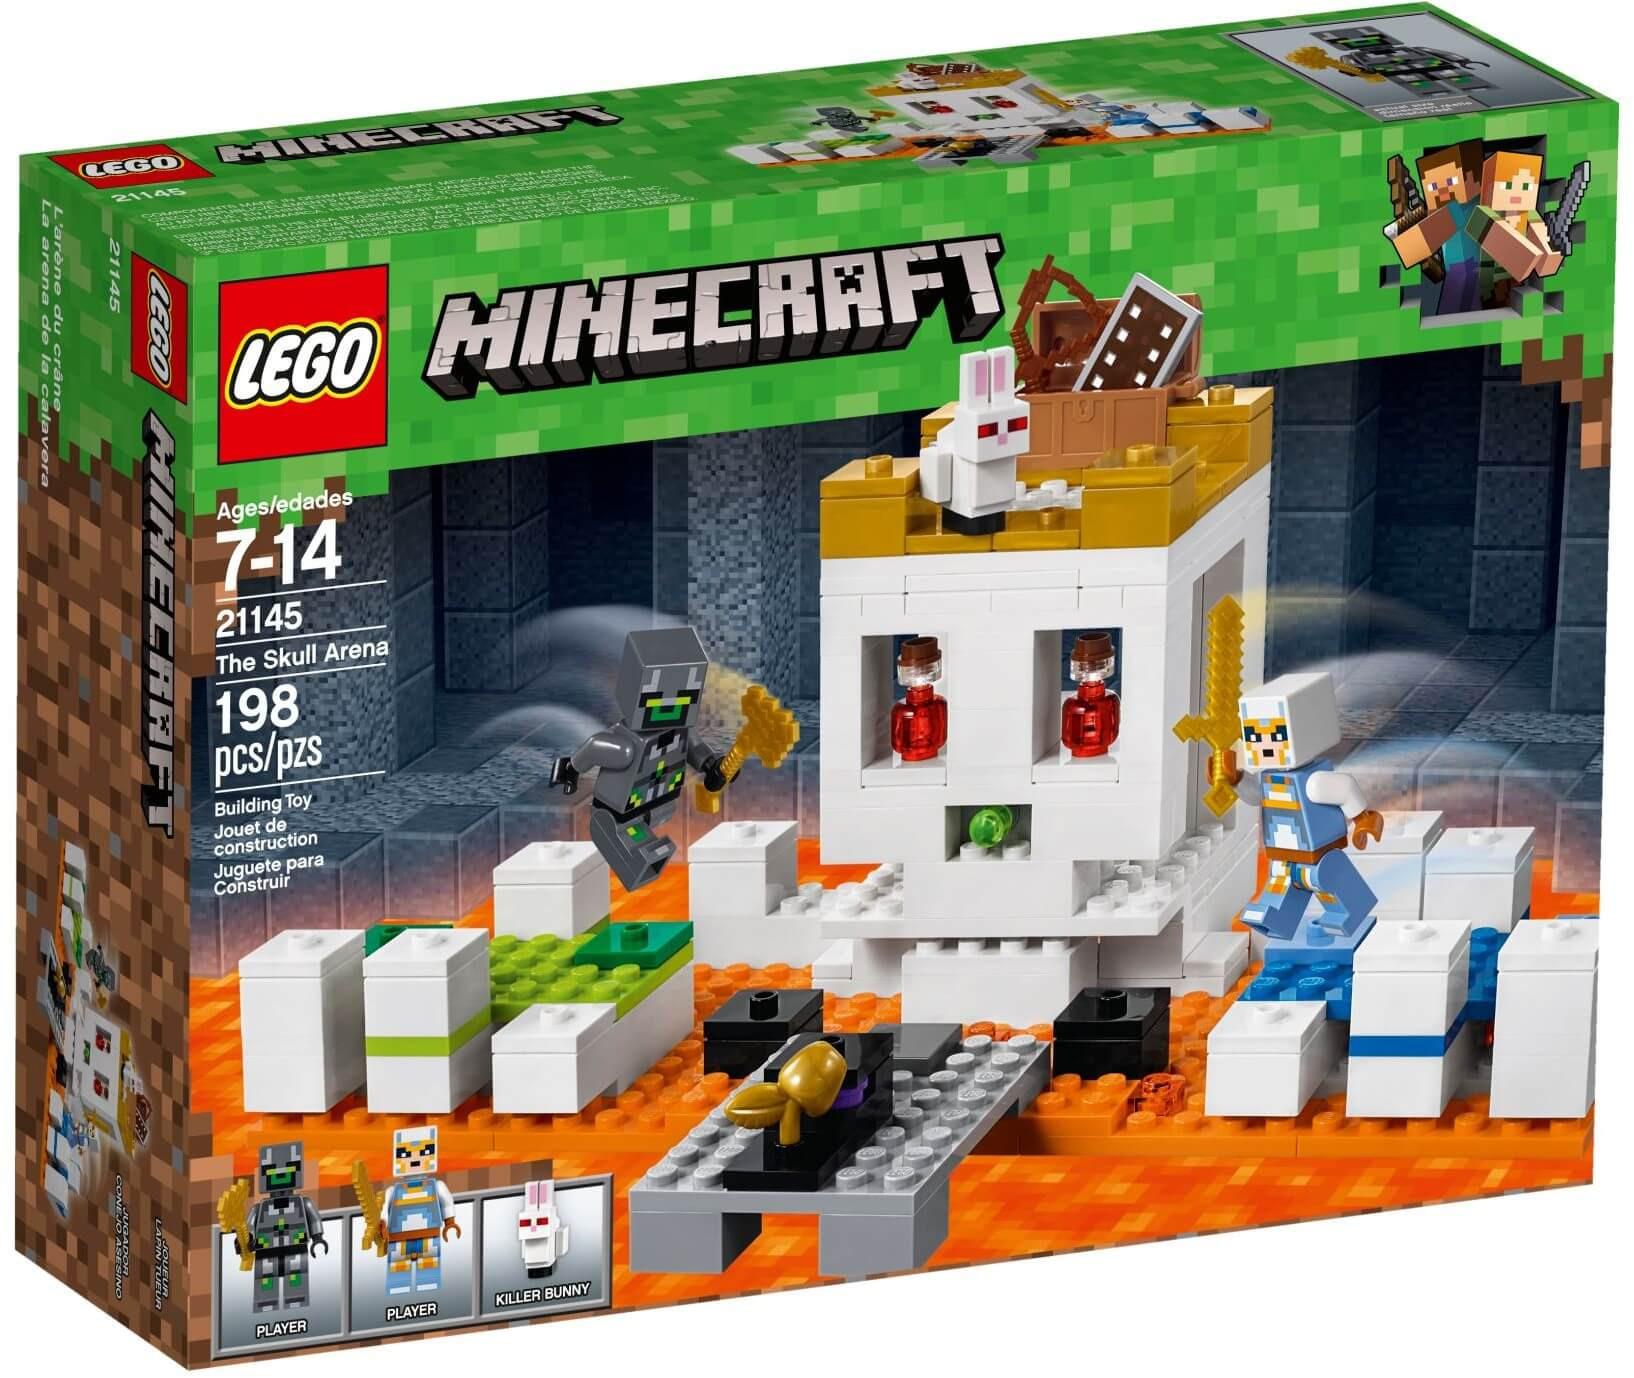 Lego Minecraft Giá Rẻ Giá Tốt T082023  Mua tại Lazadavn